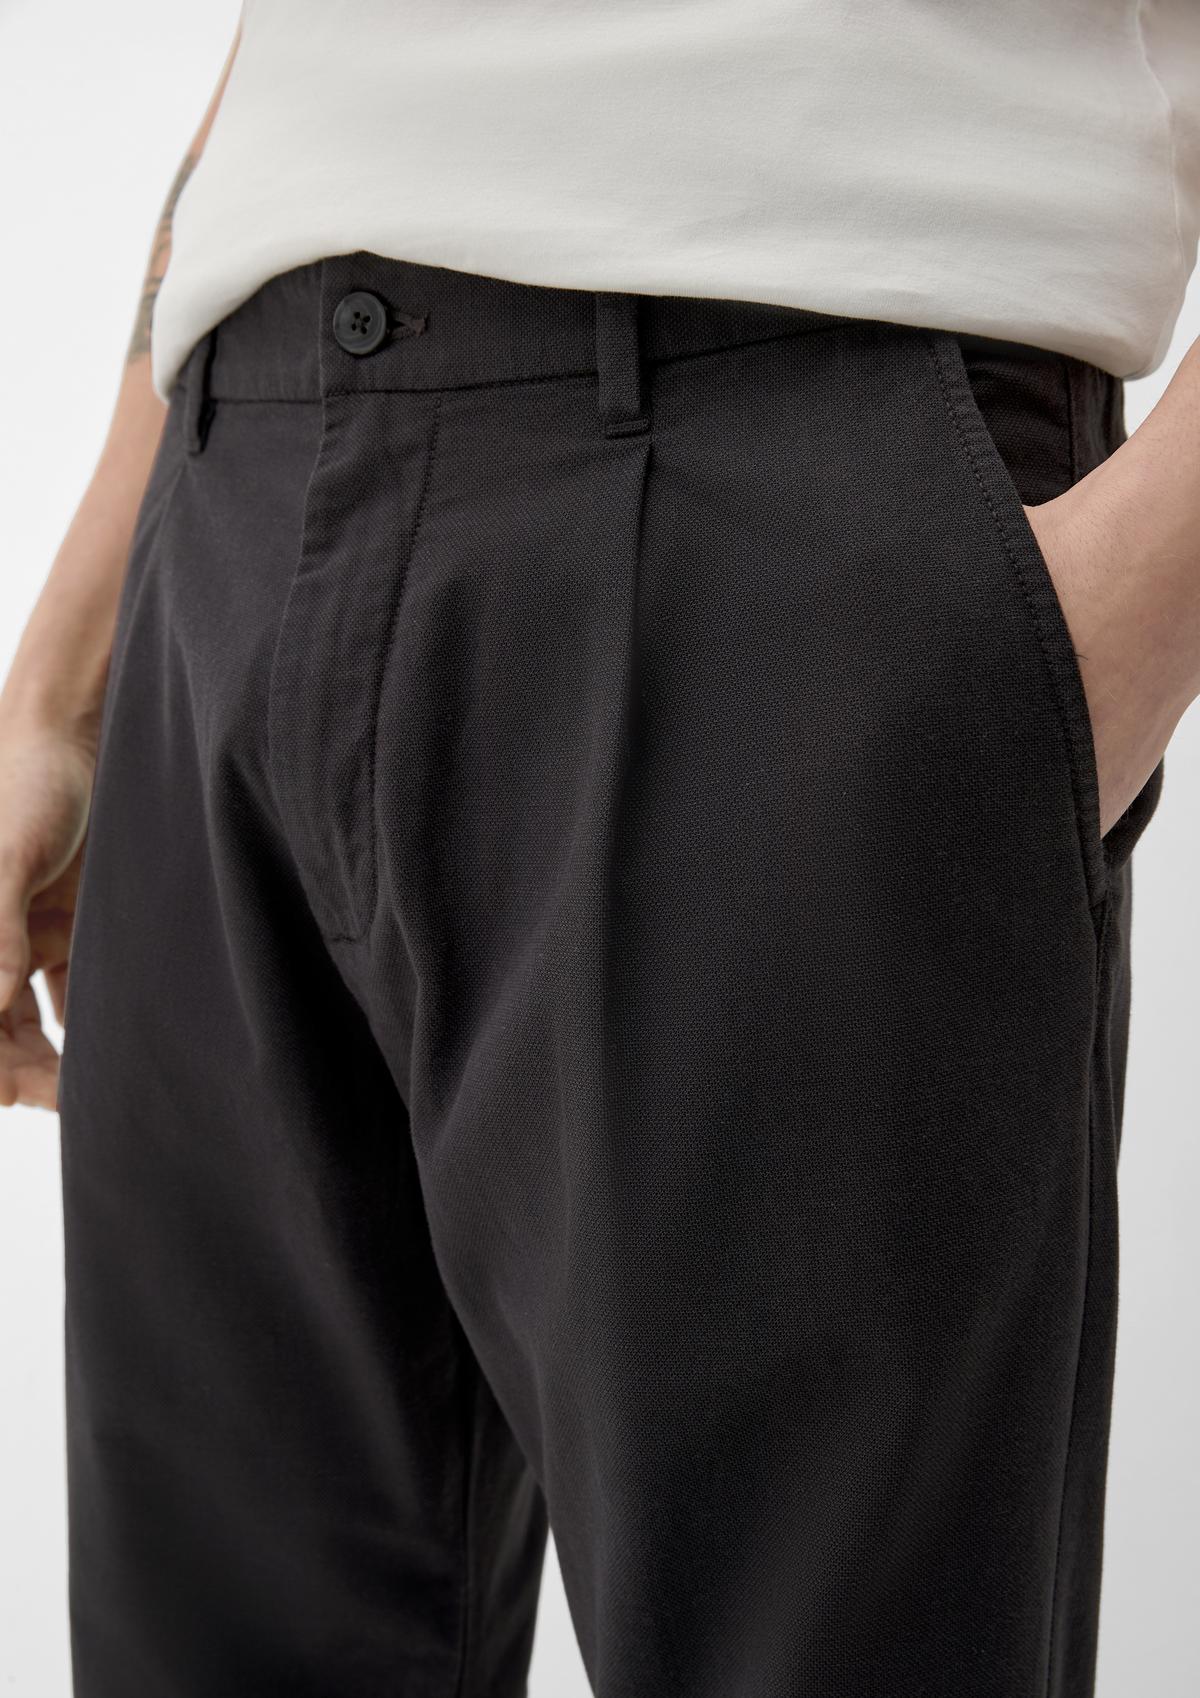 s.Oliver Relaxed: látkové kalhoty s rovnými nohavicemi